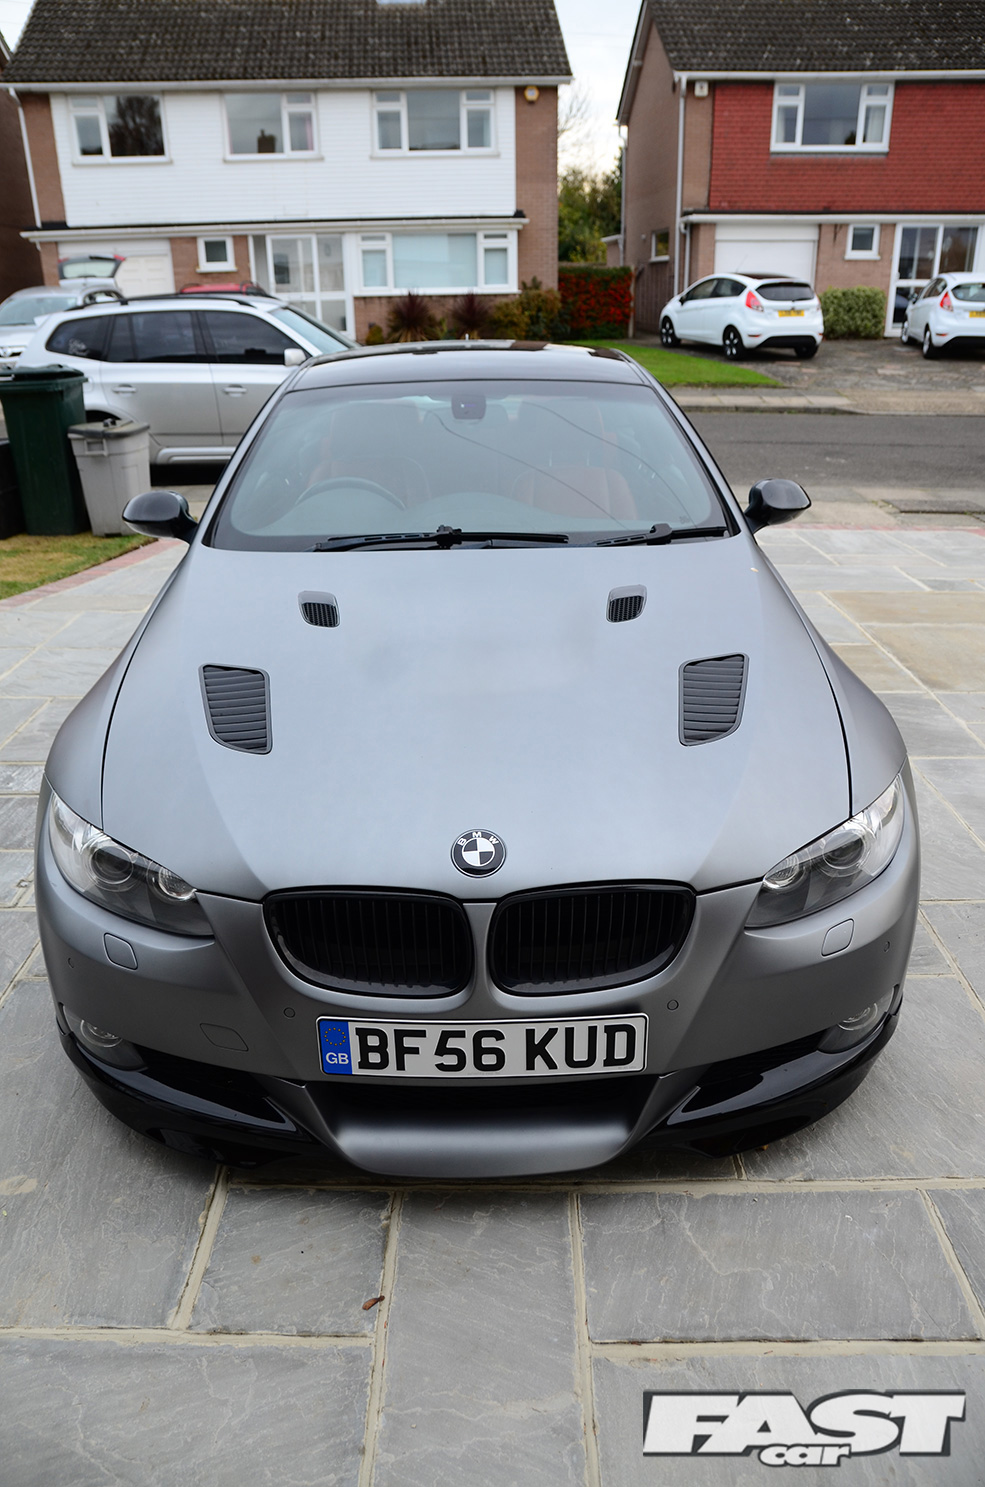 JULES’ BMW 335I front profile